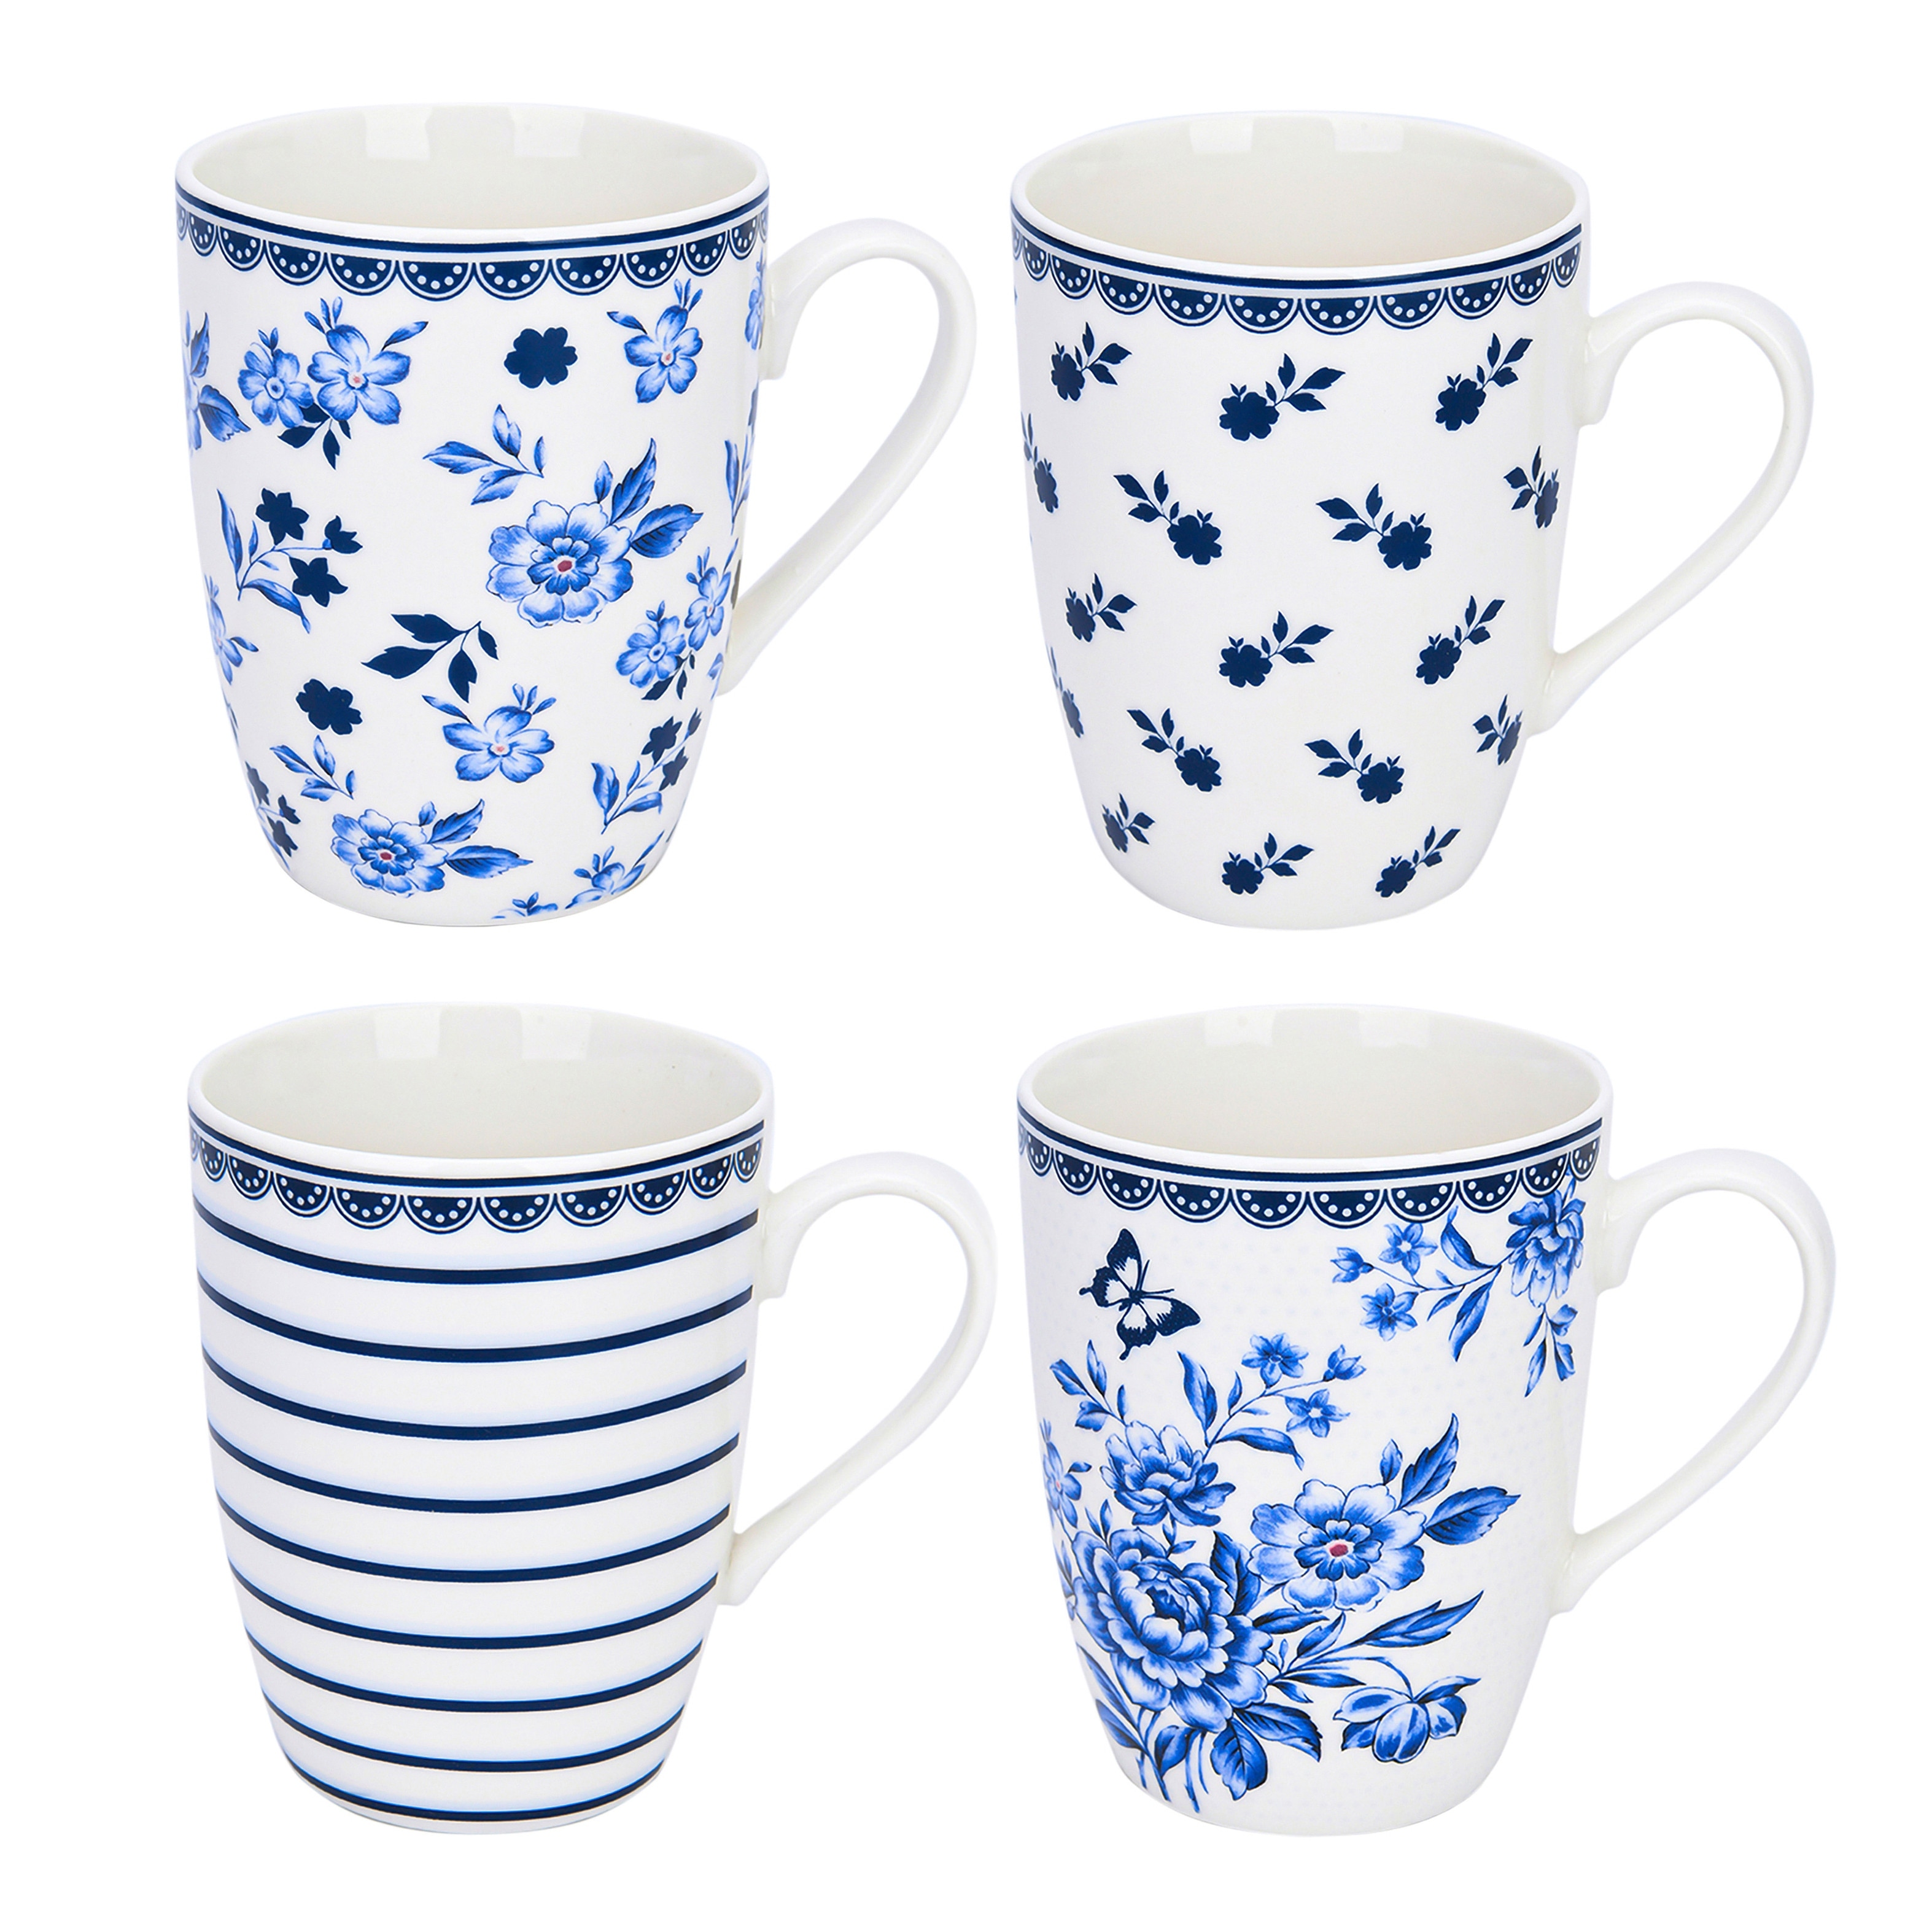 https://ak1.ostkcdn.com/images/products/is/images/direct/fa251ab042baee262d350f7c00a3291b4133f380/STP-Goods-Vintage-Blue-Coffee-Tea-Bone-China-Mugs-Set-of-4.jpg